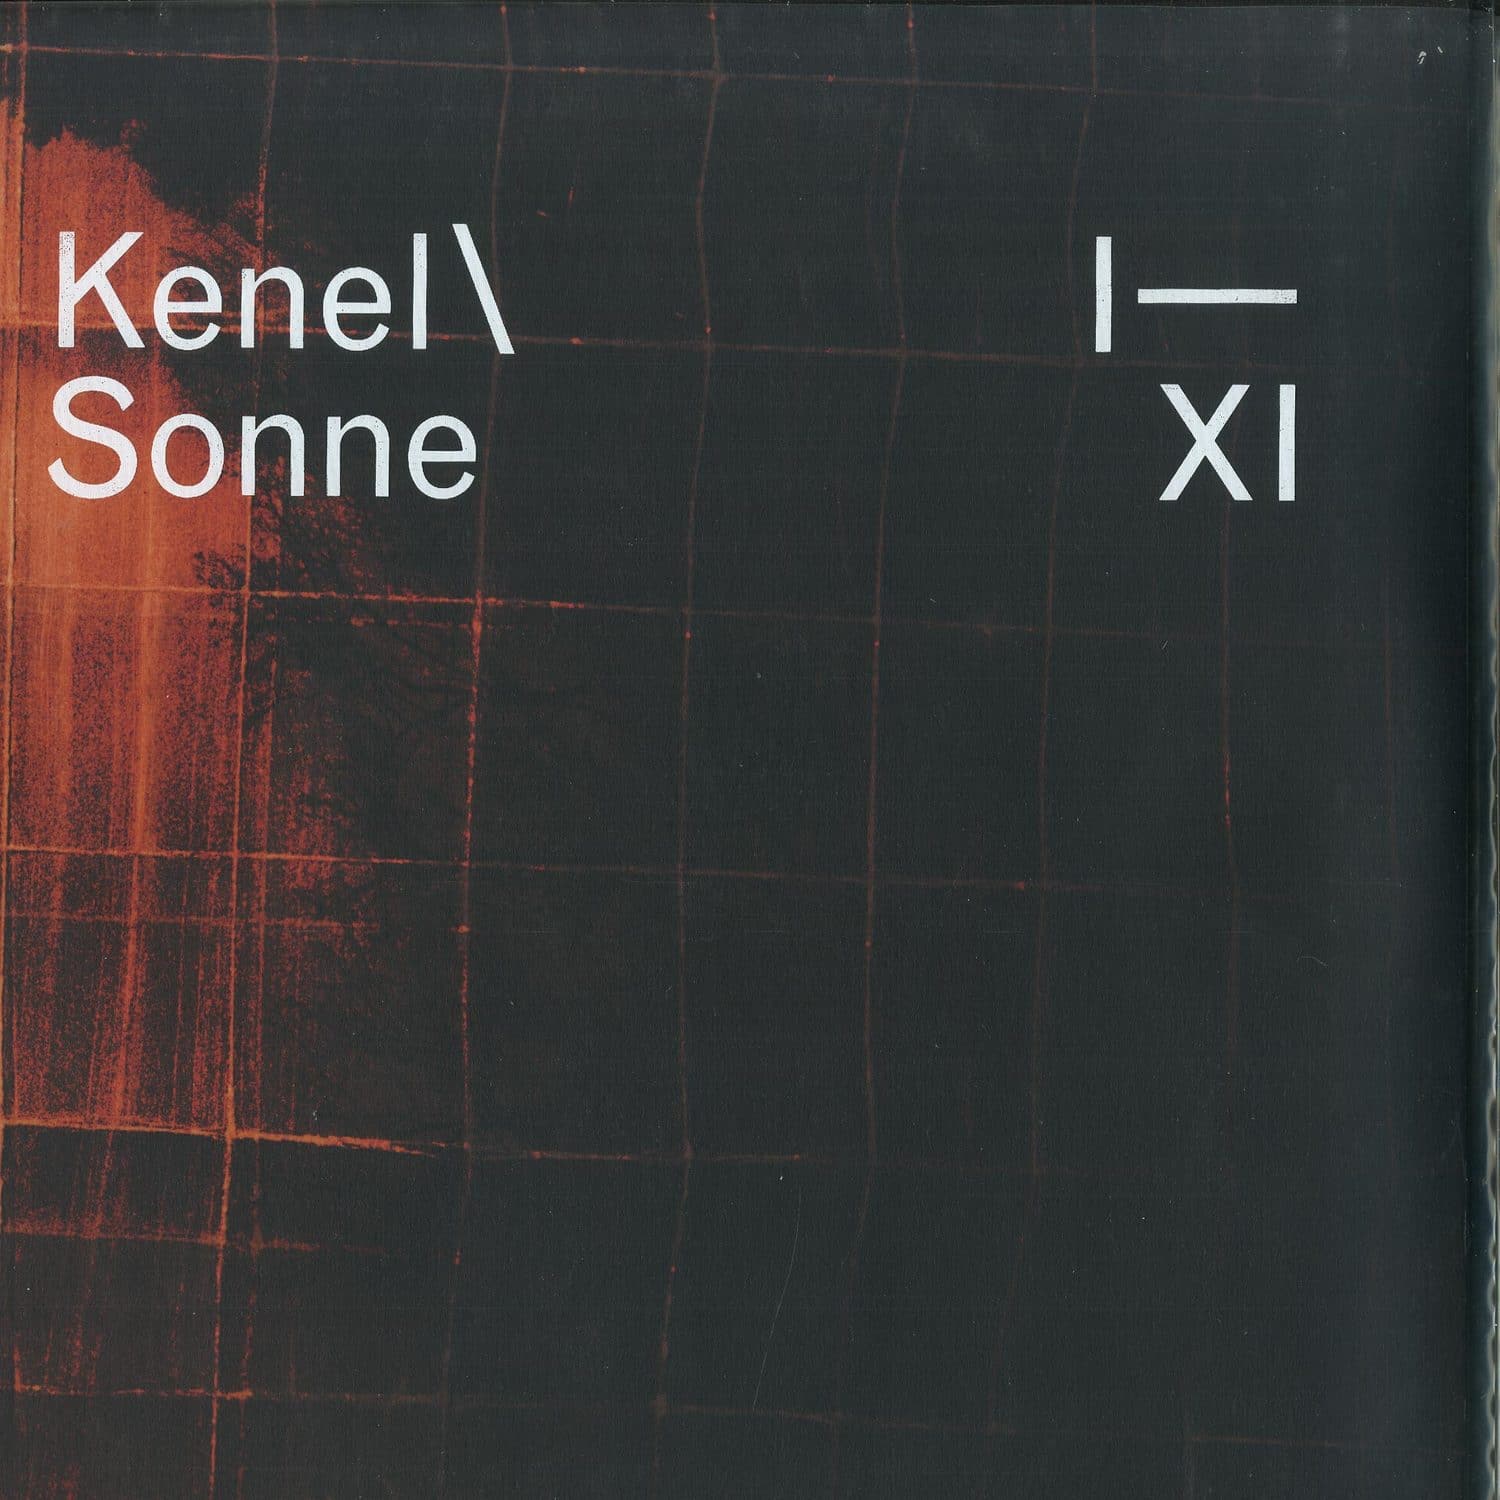 KenelSonne - I - XI 